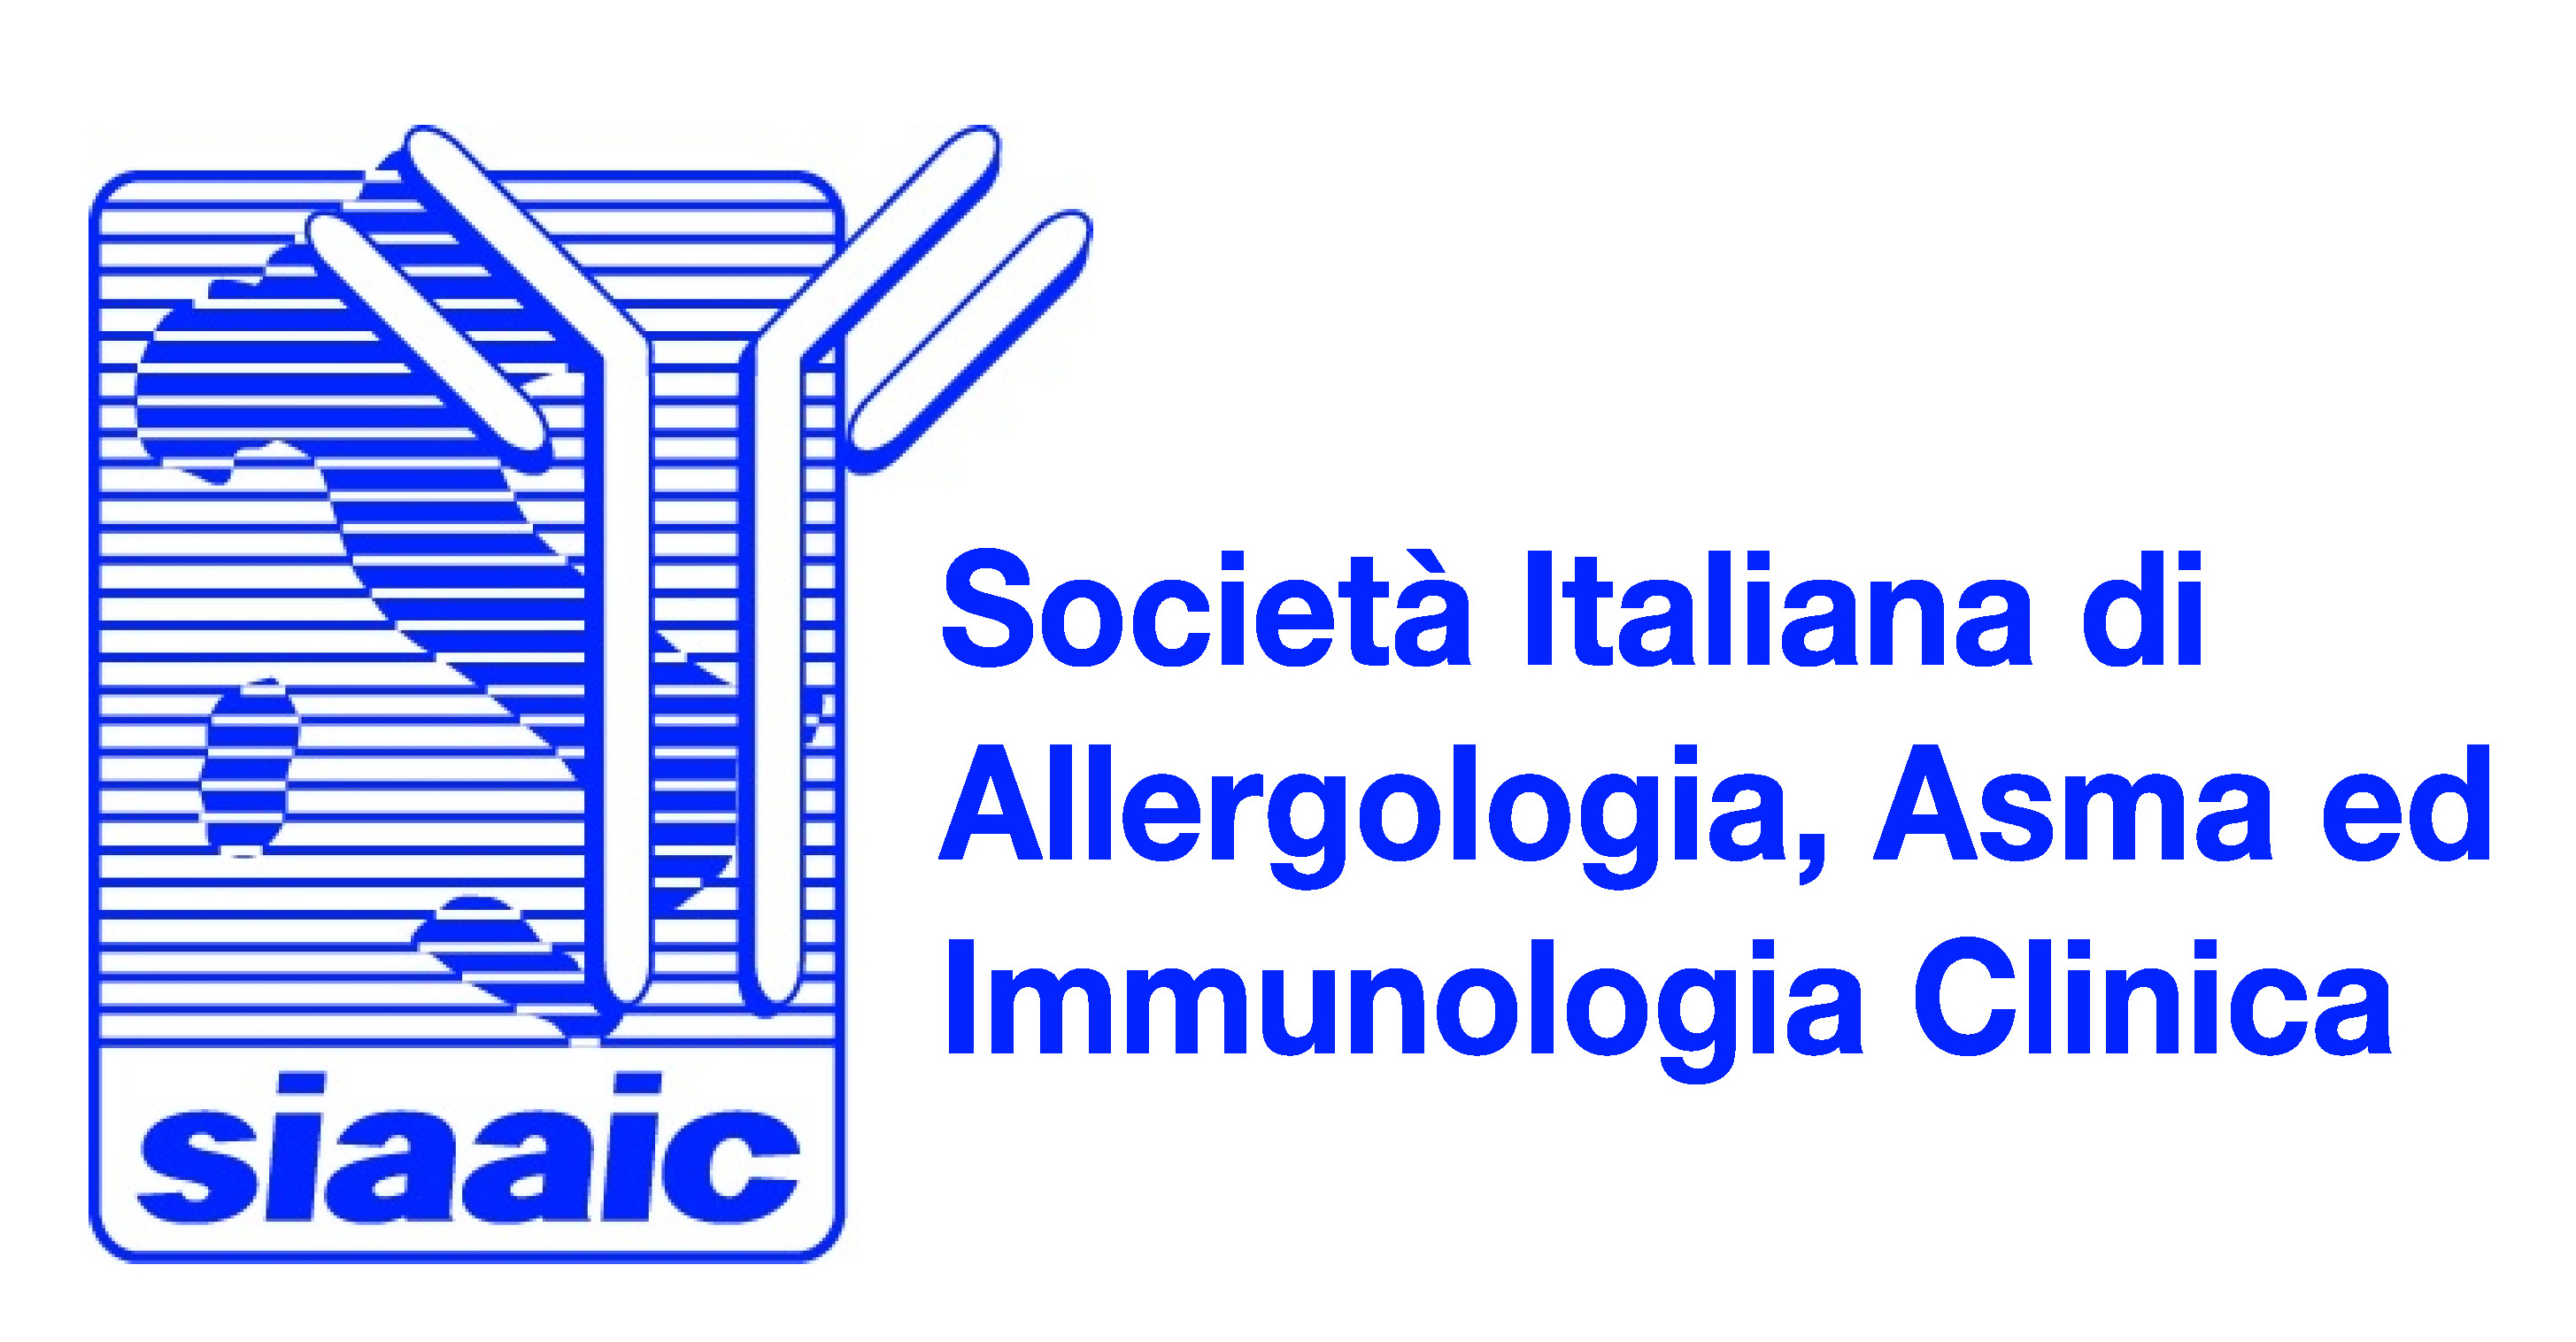 SIAAIC - Società Italiana di Allergologia, Asma ed immunologia Clinica